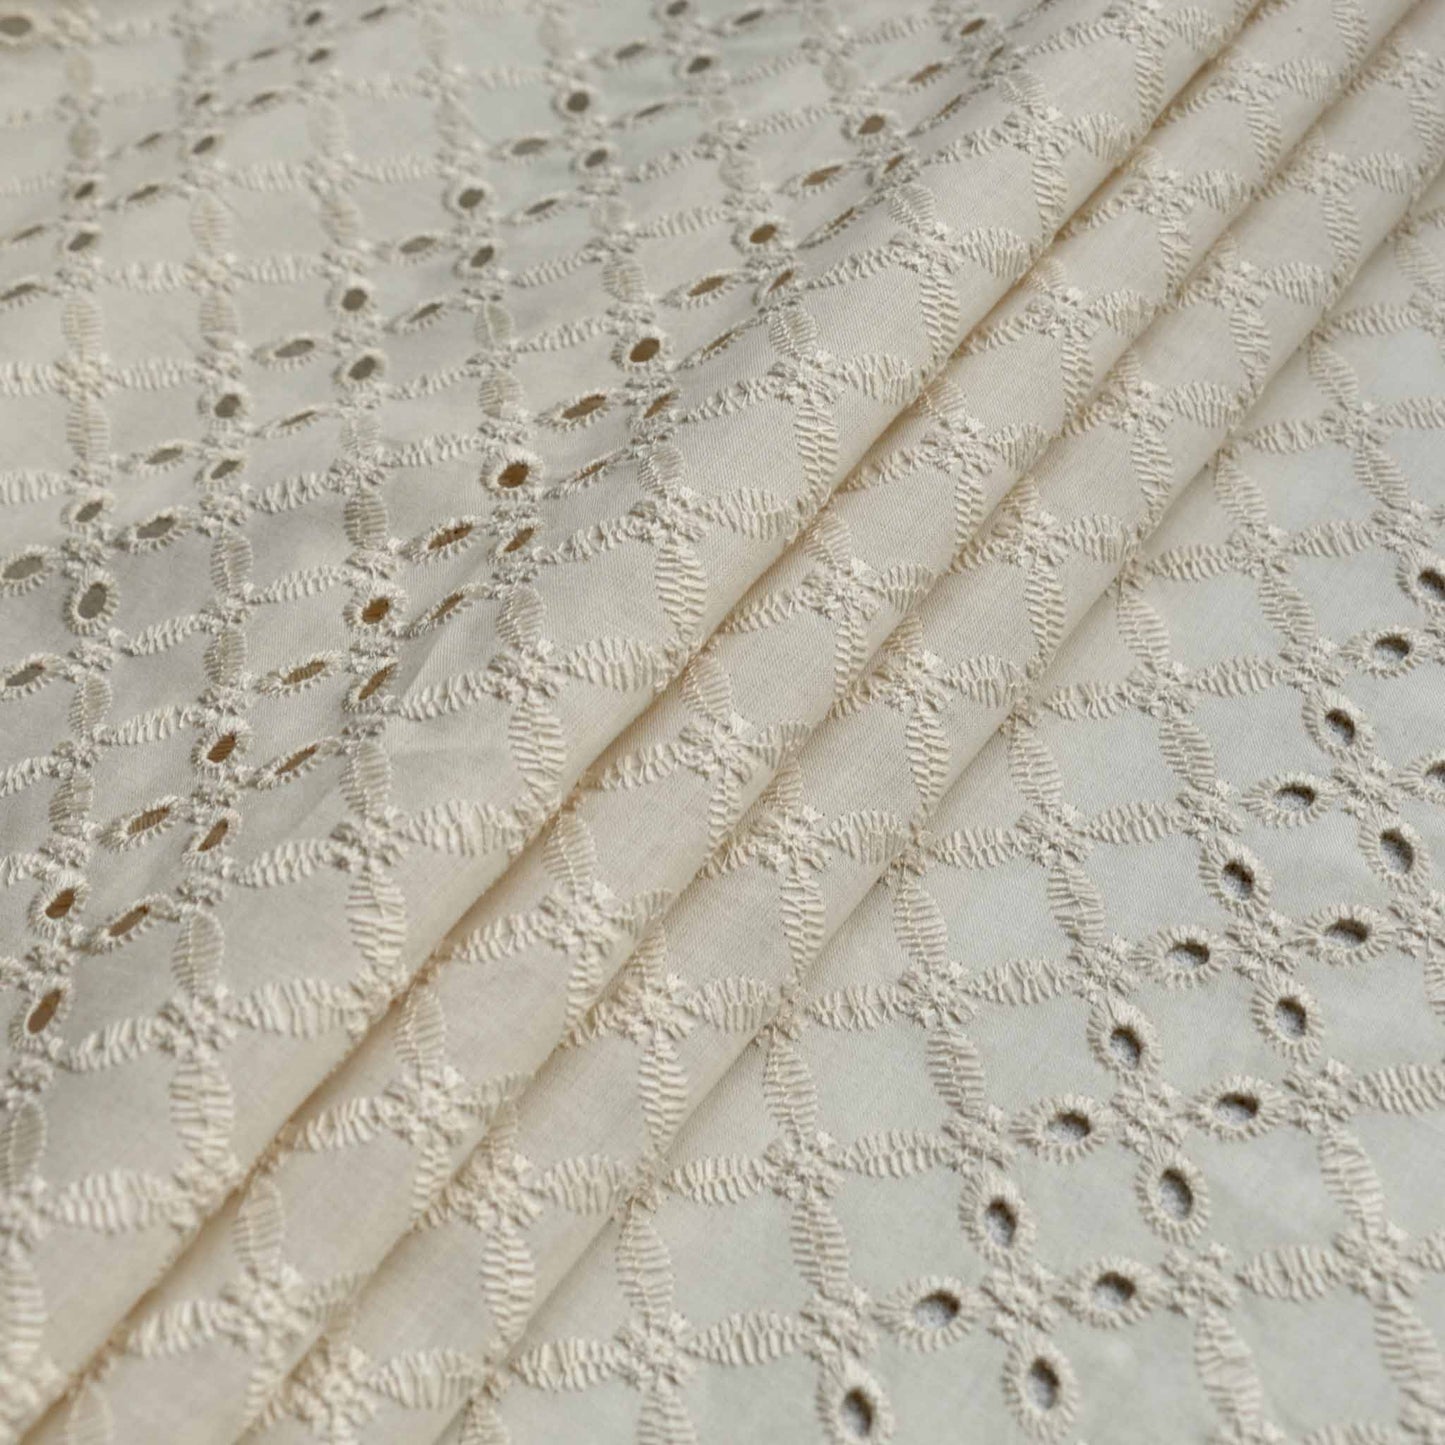 folded cream broad anglaise dressmaking fabric with 4 hole pattern